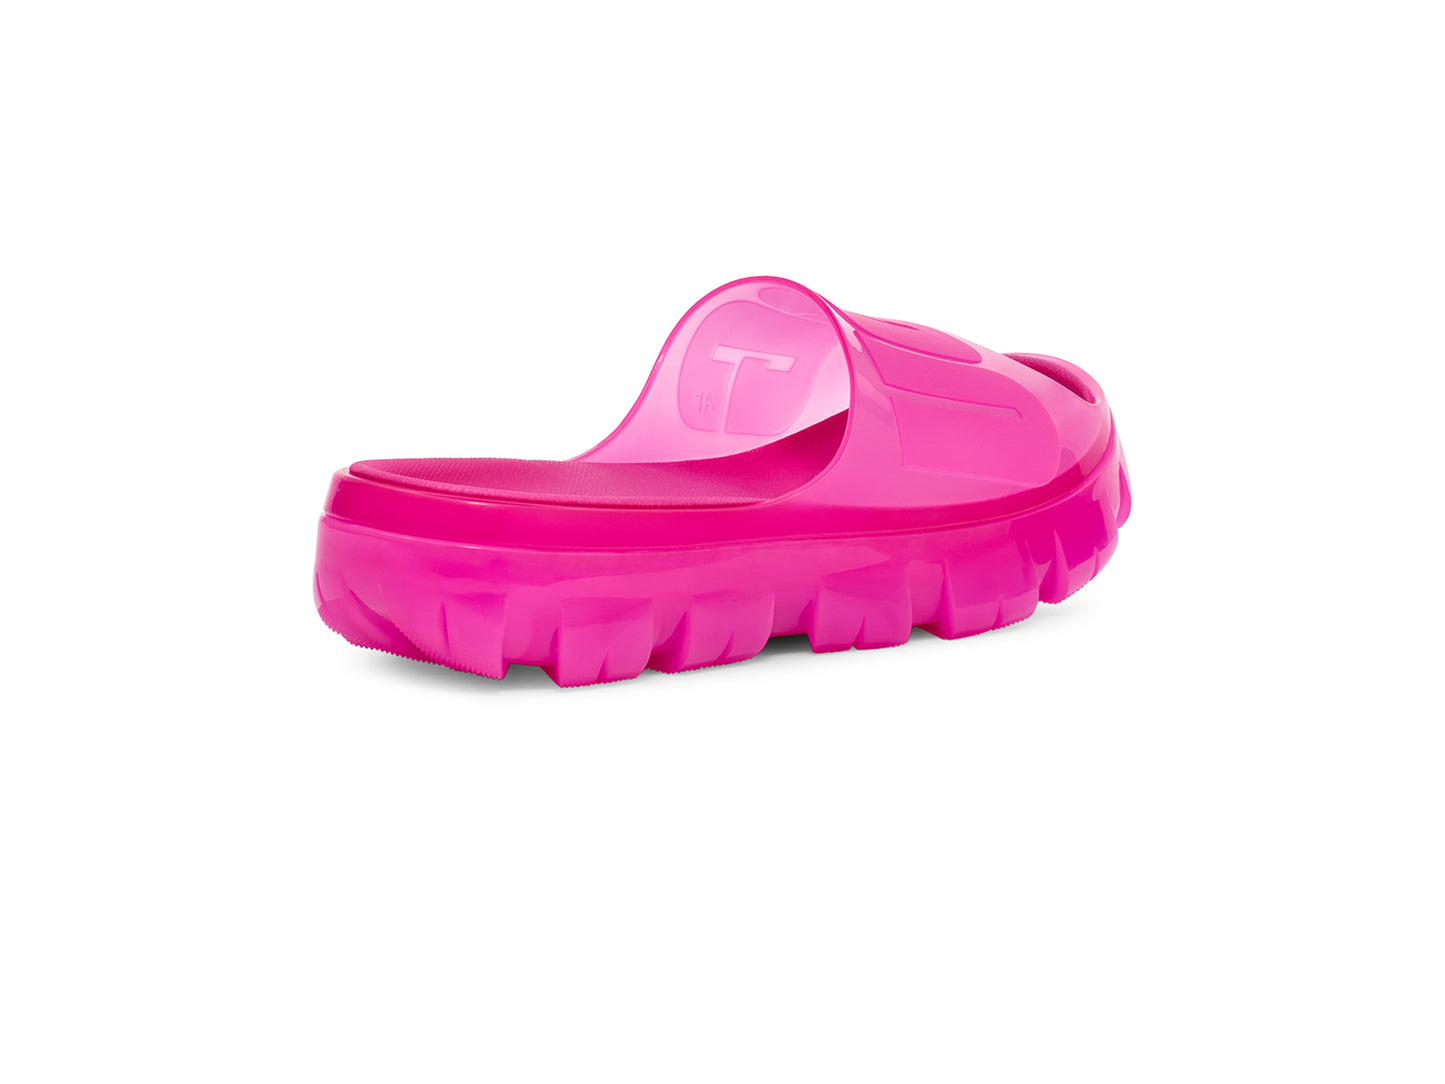 UGG Women's Jella Clear Slide Sandals